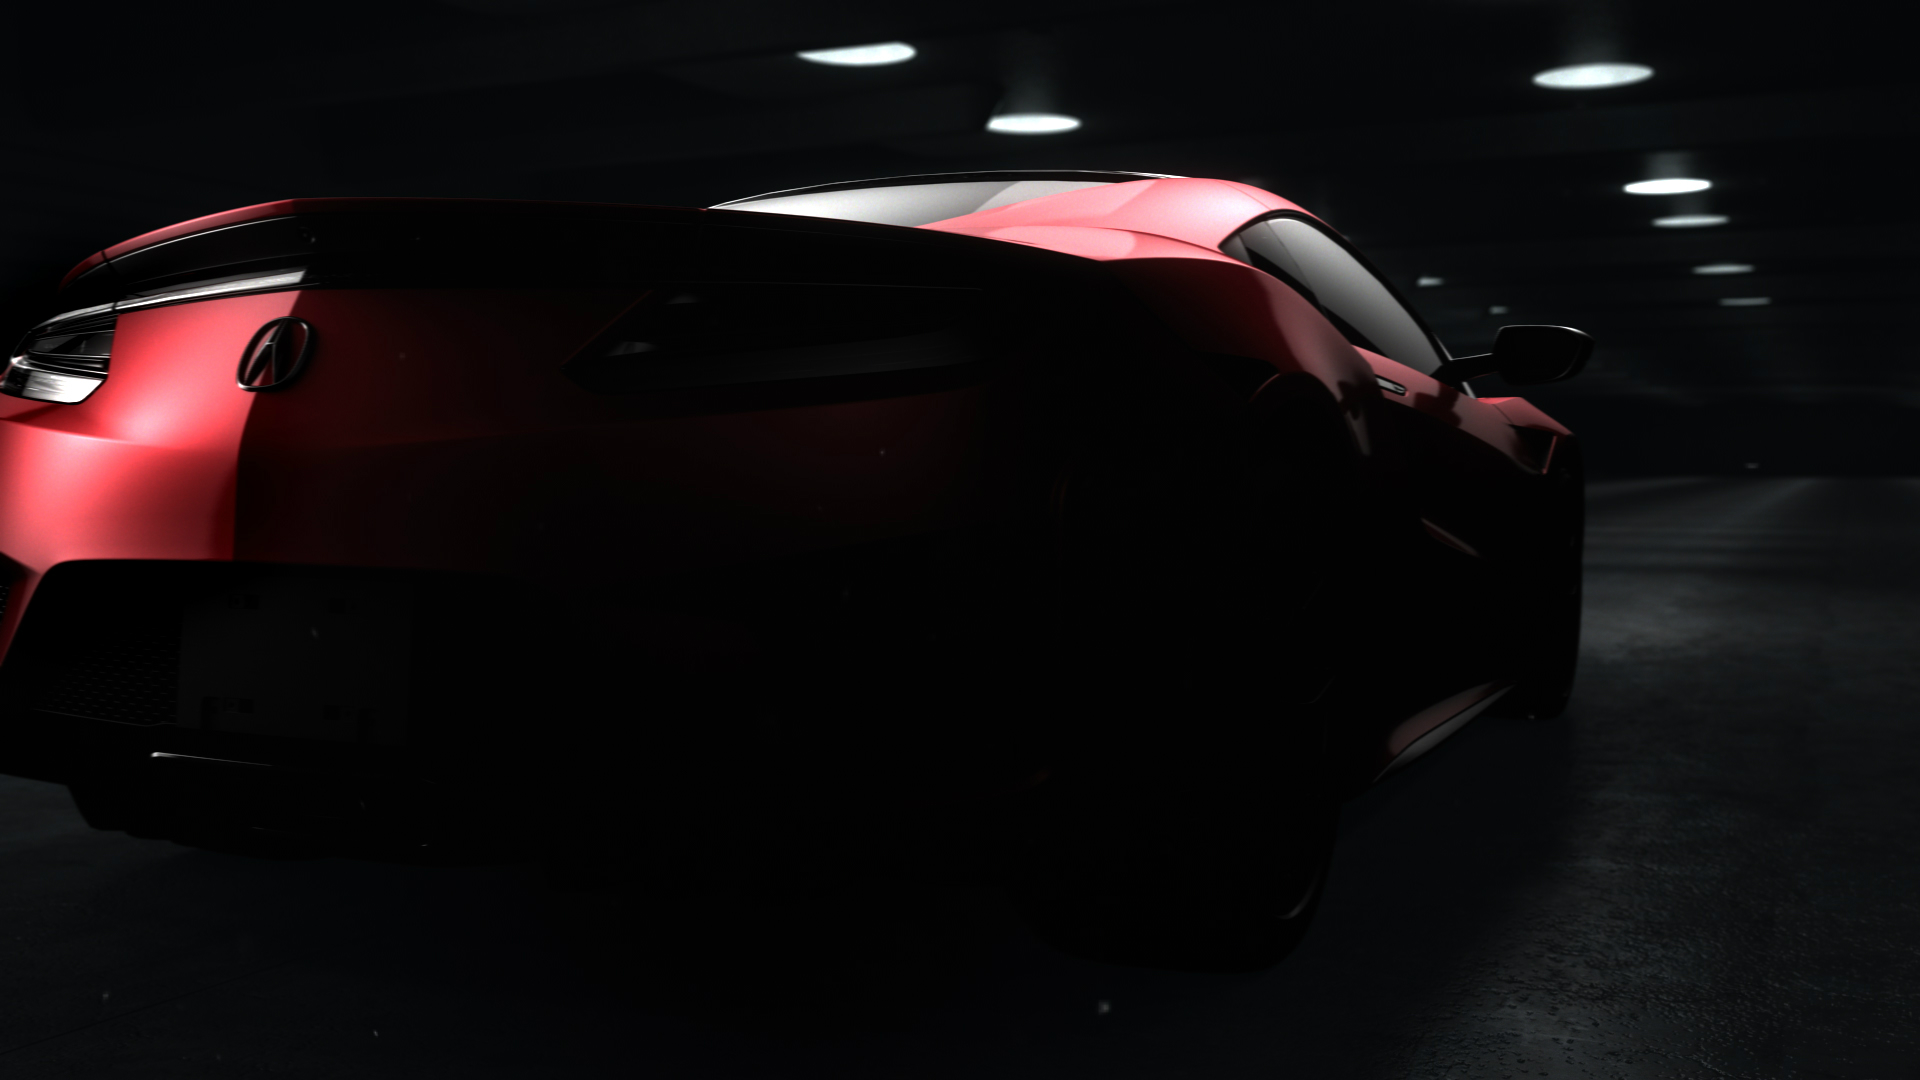 Honda NSX 2015 rear view